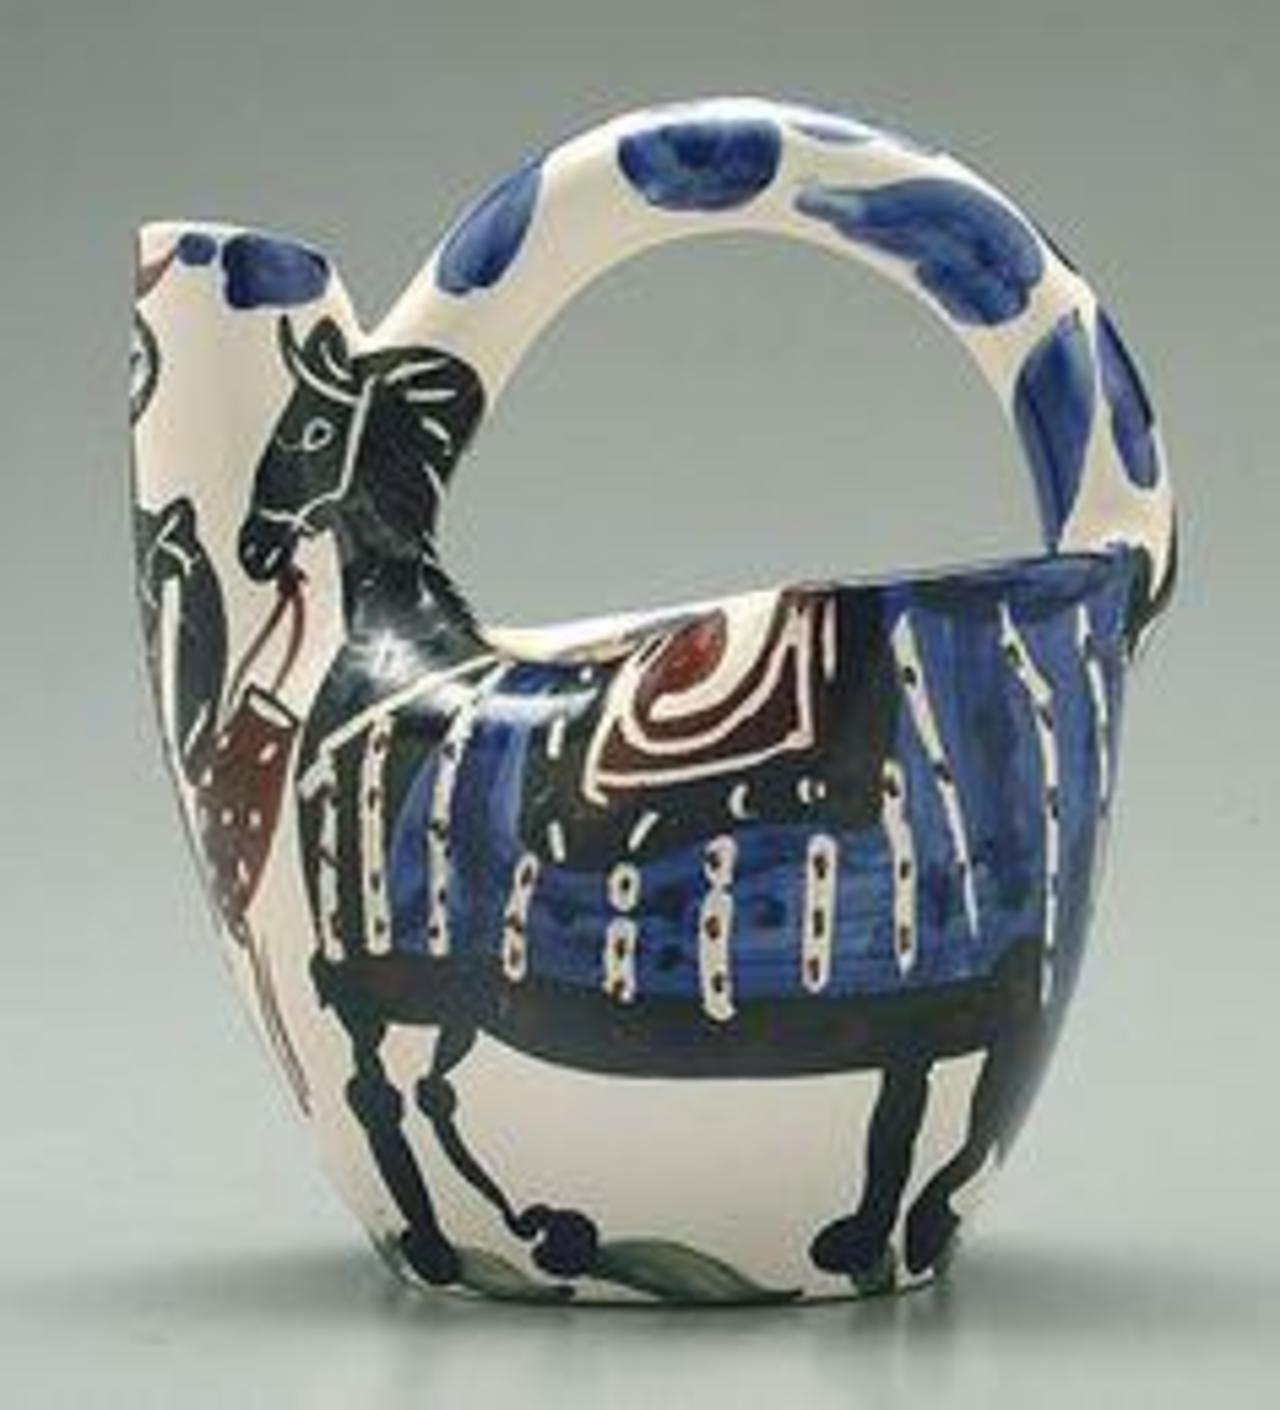 picasso ceramics http://t.co/X5cCCKbel5